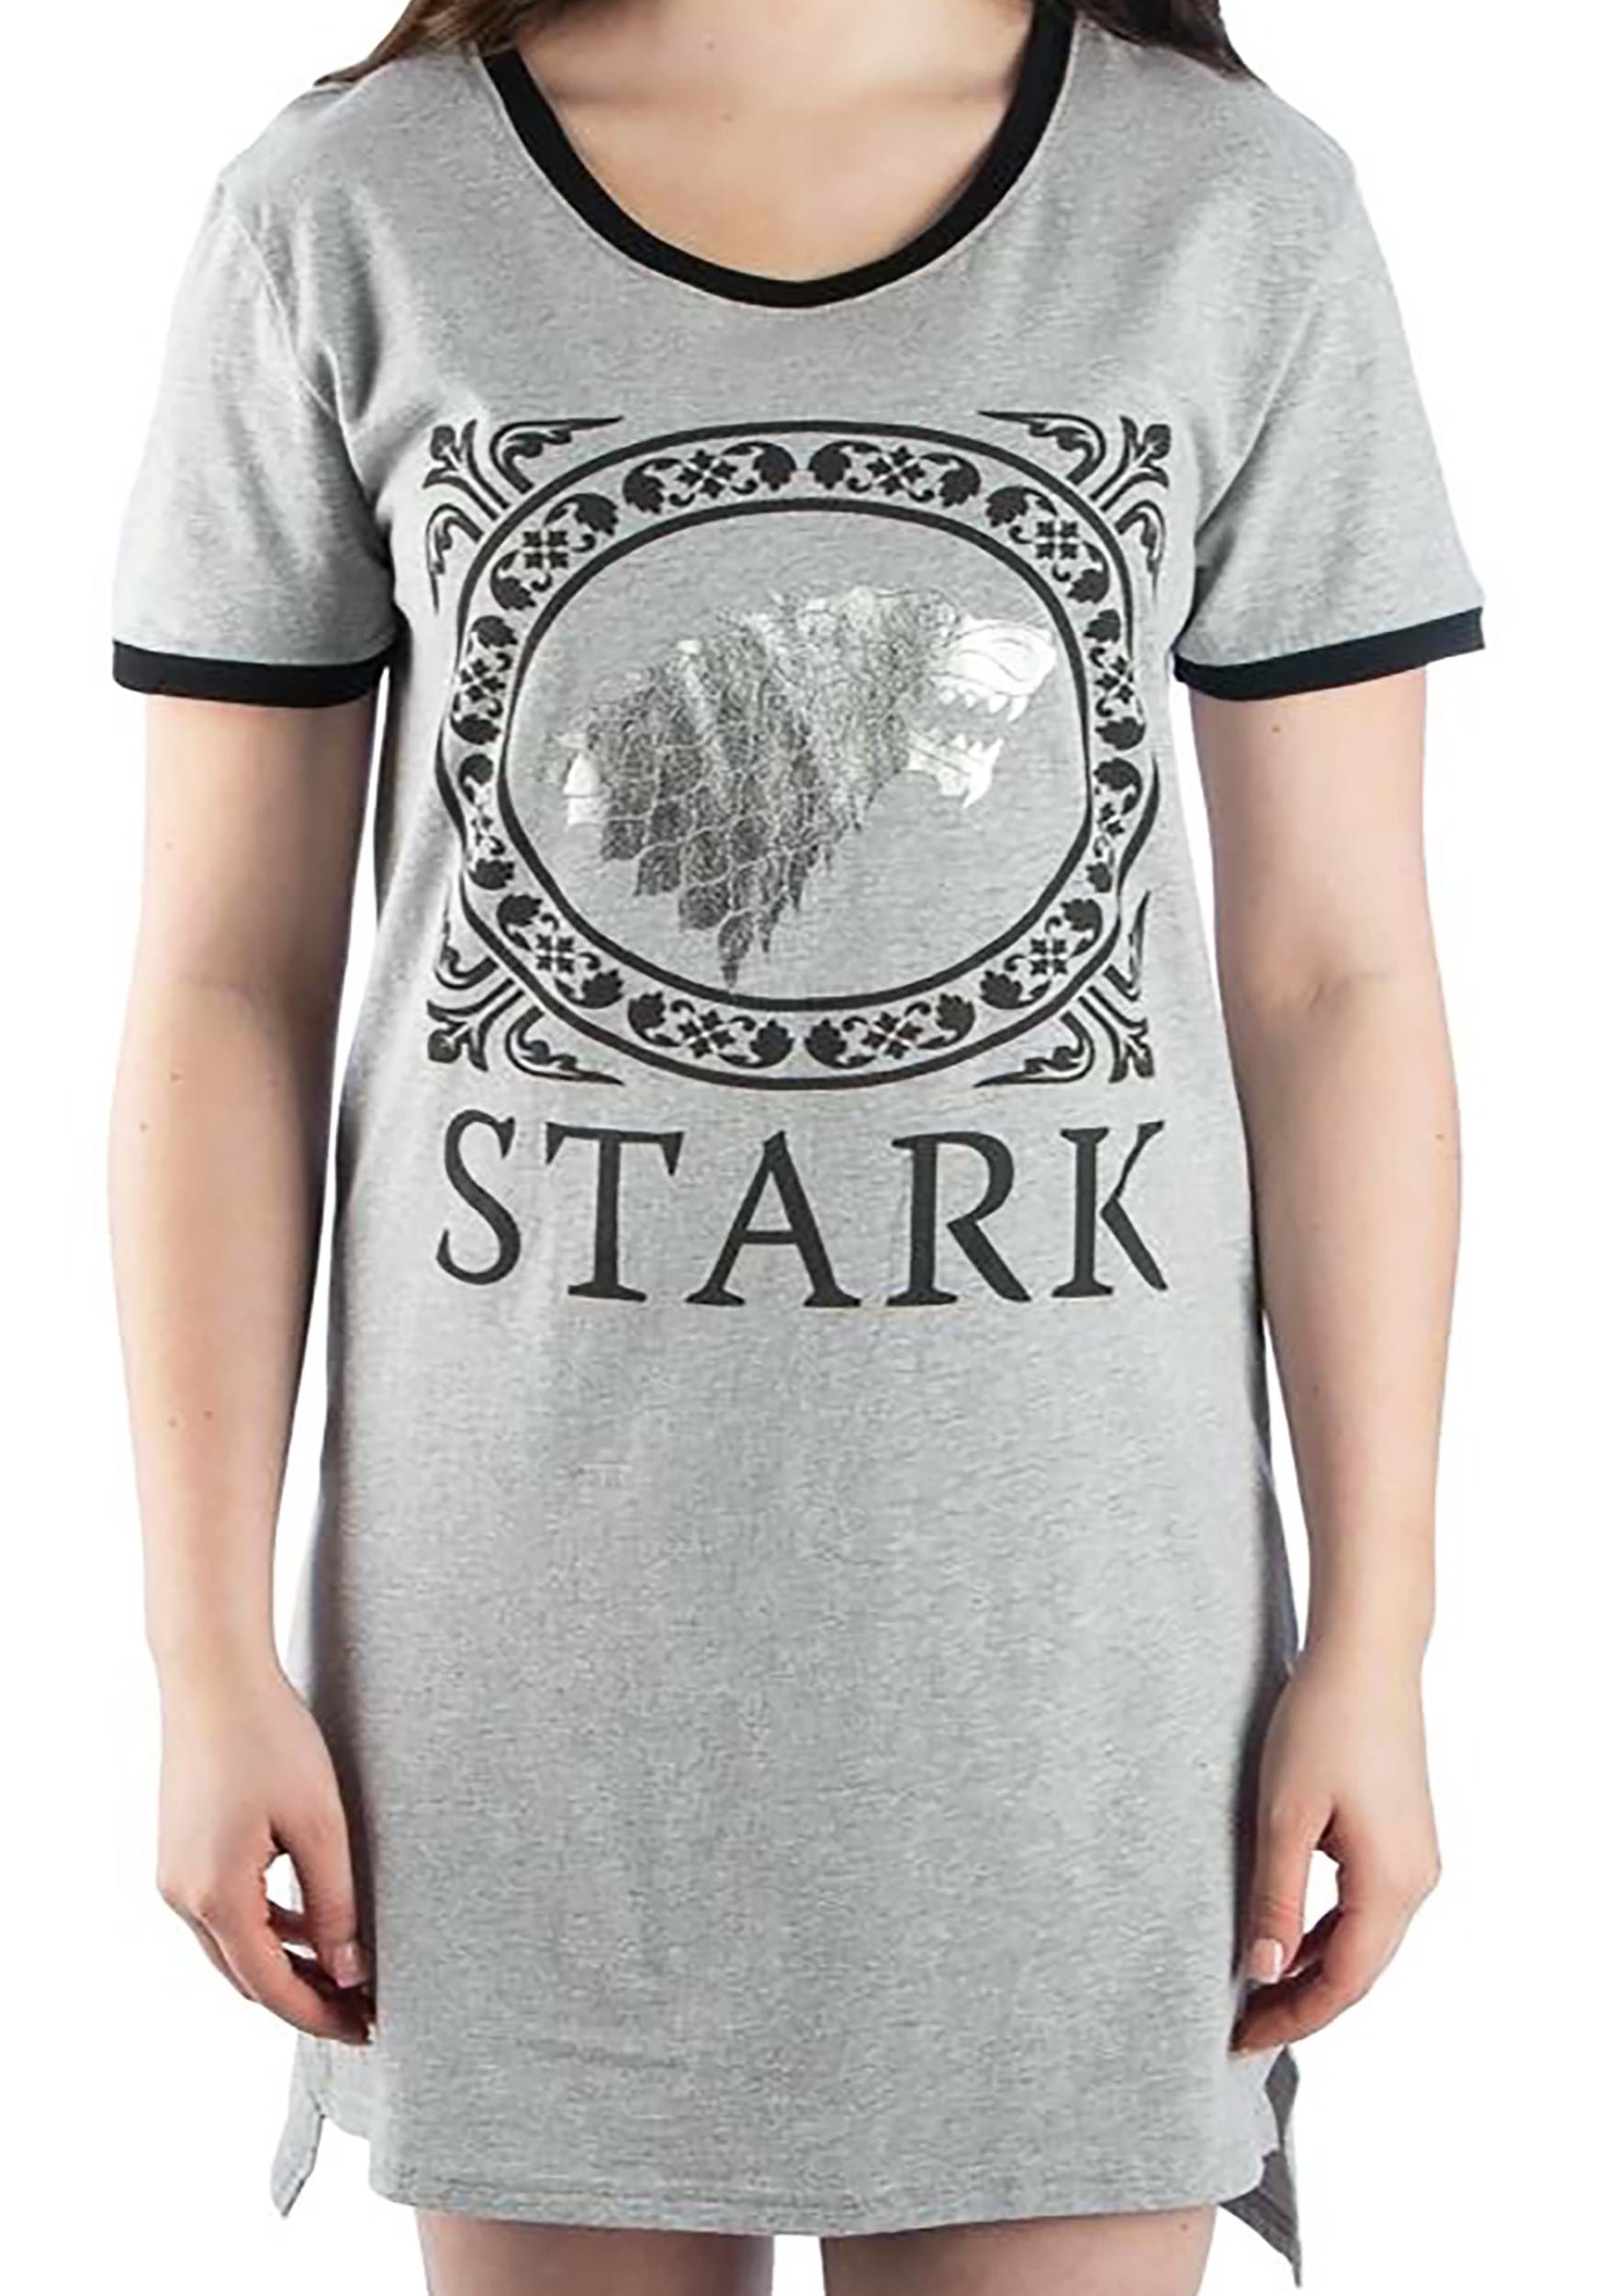 House Stark Sleep Shirt Game of Thrones